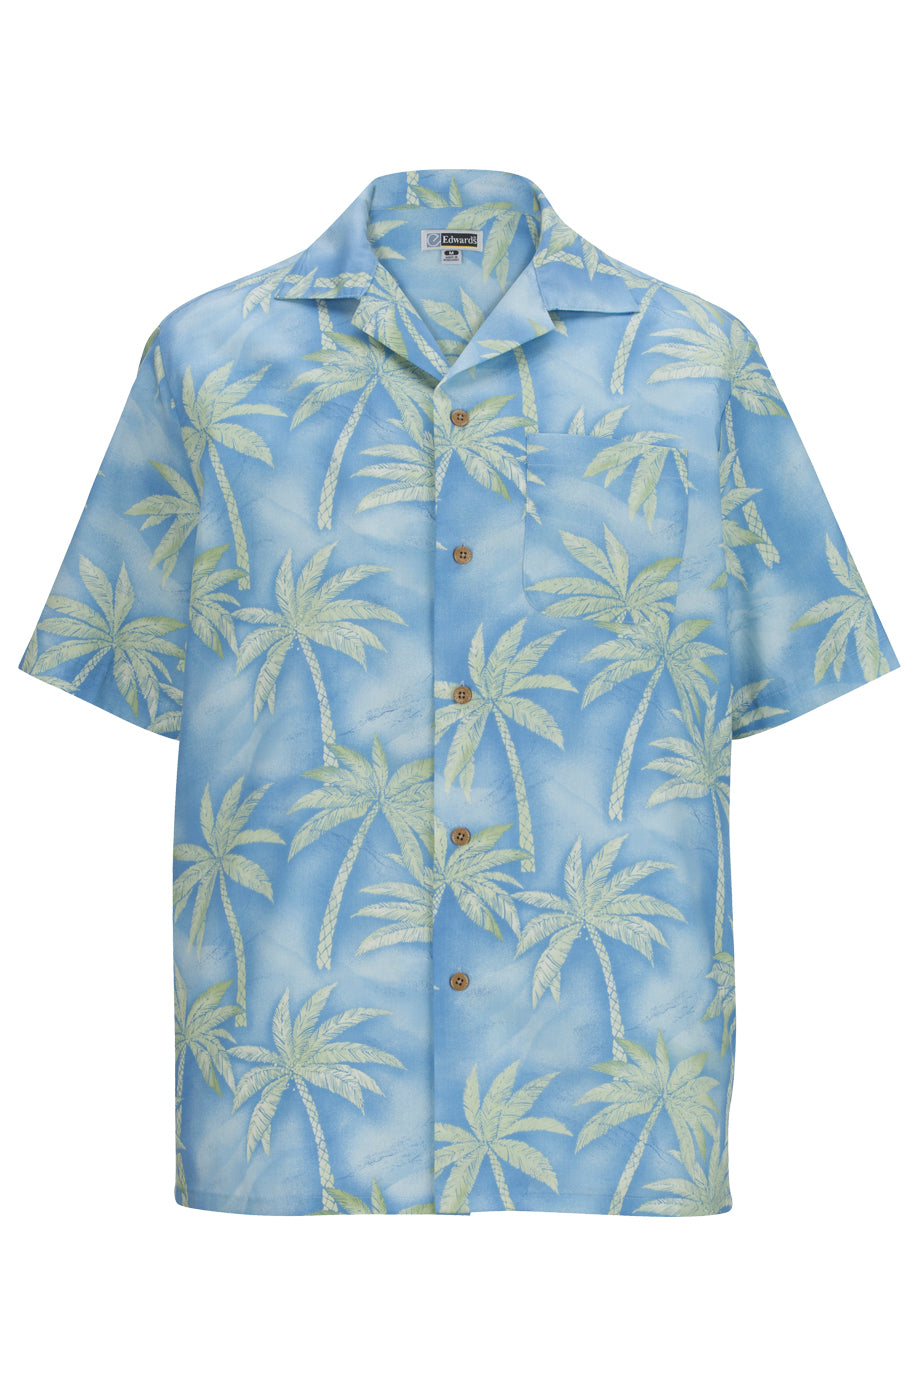 Tropical Palm Tree Camp Shirt